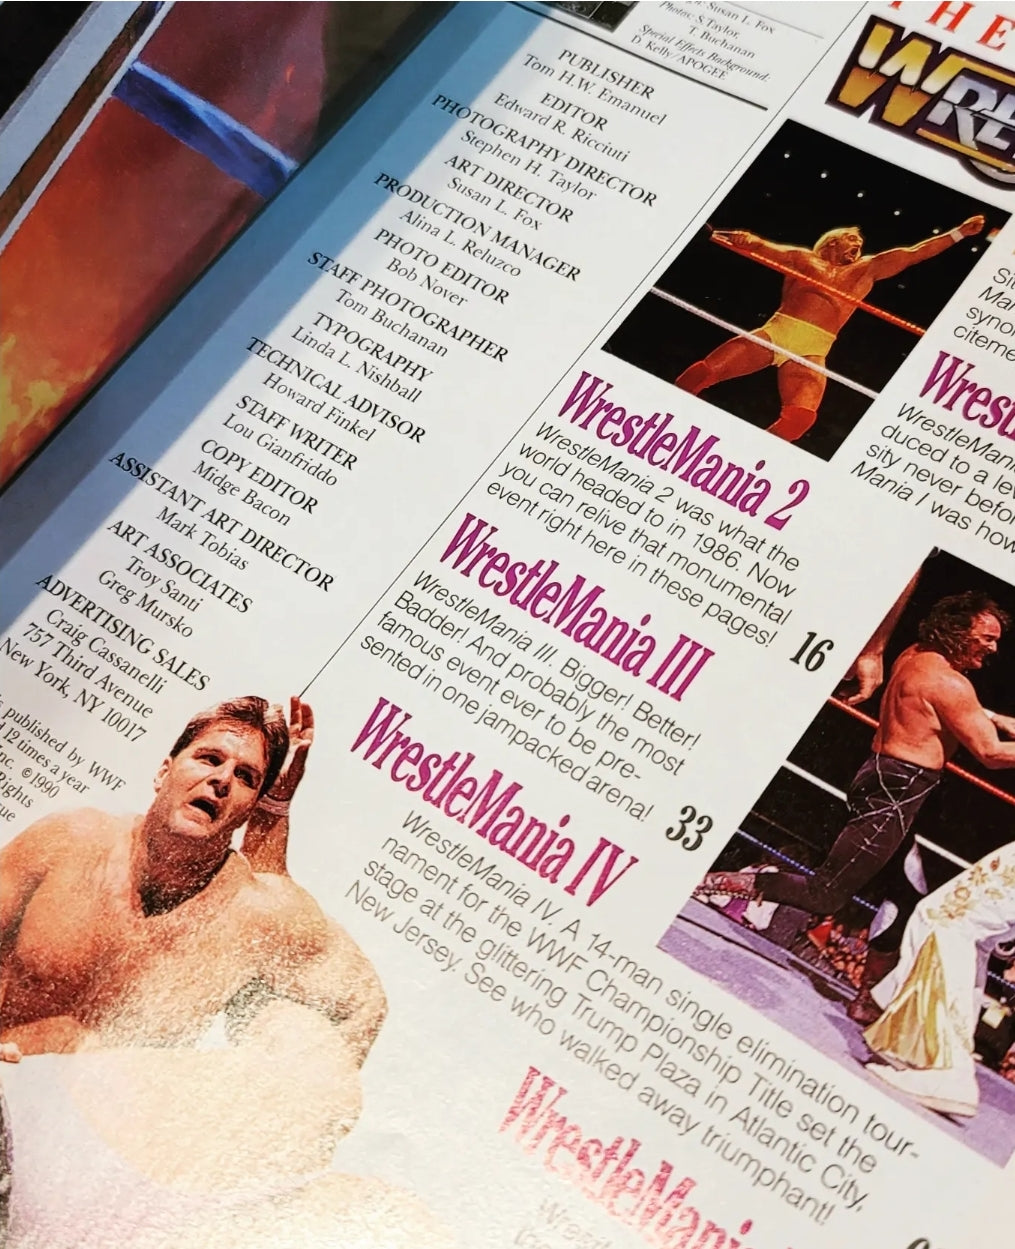 History Of WWF WWE Wrestlemania (1-5) Magazine